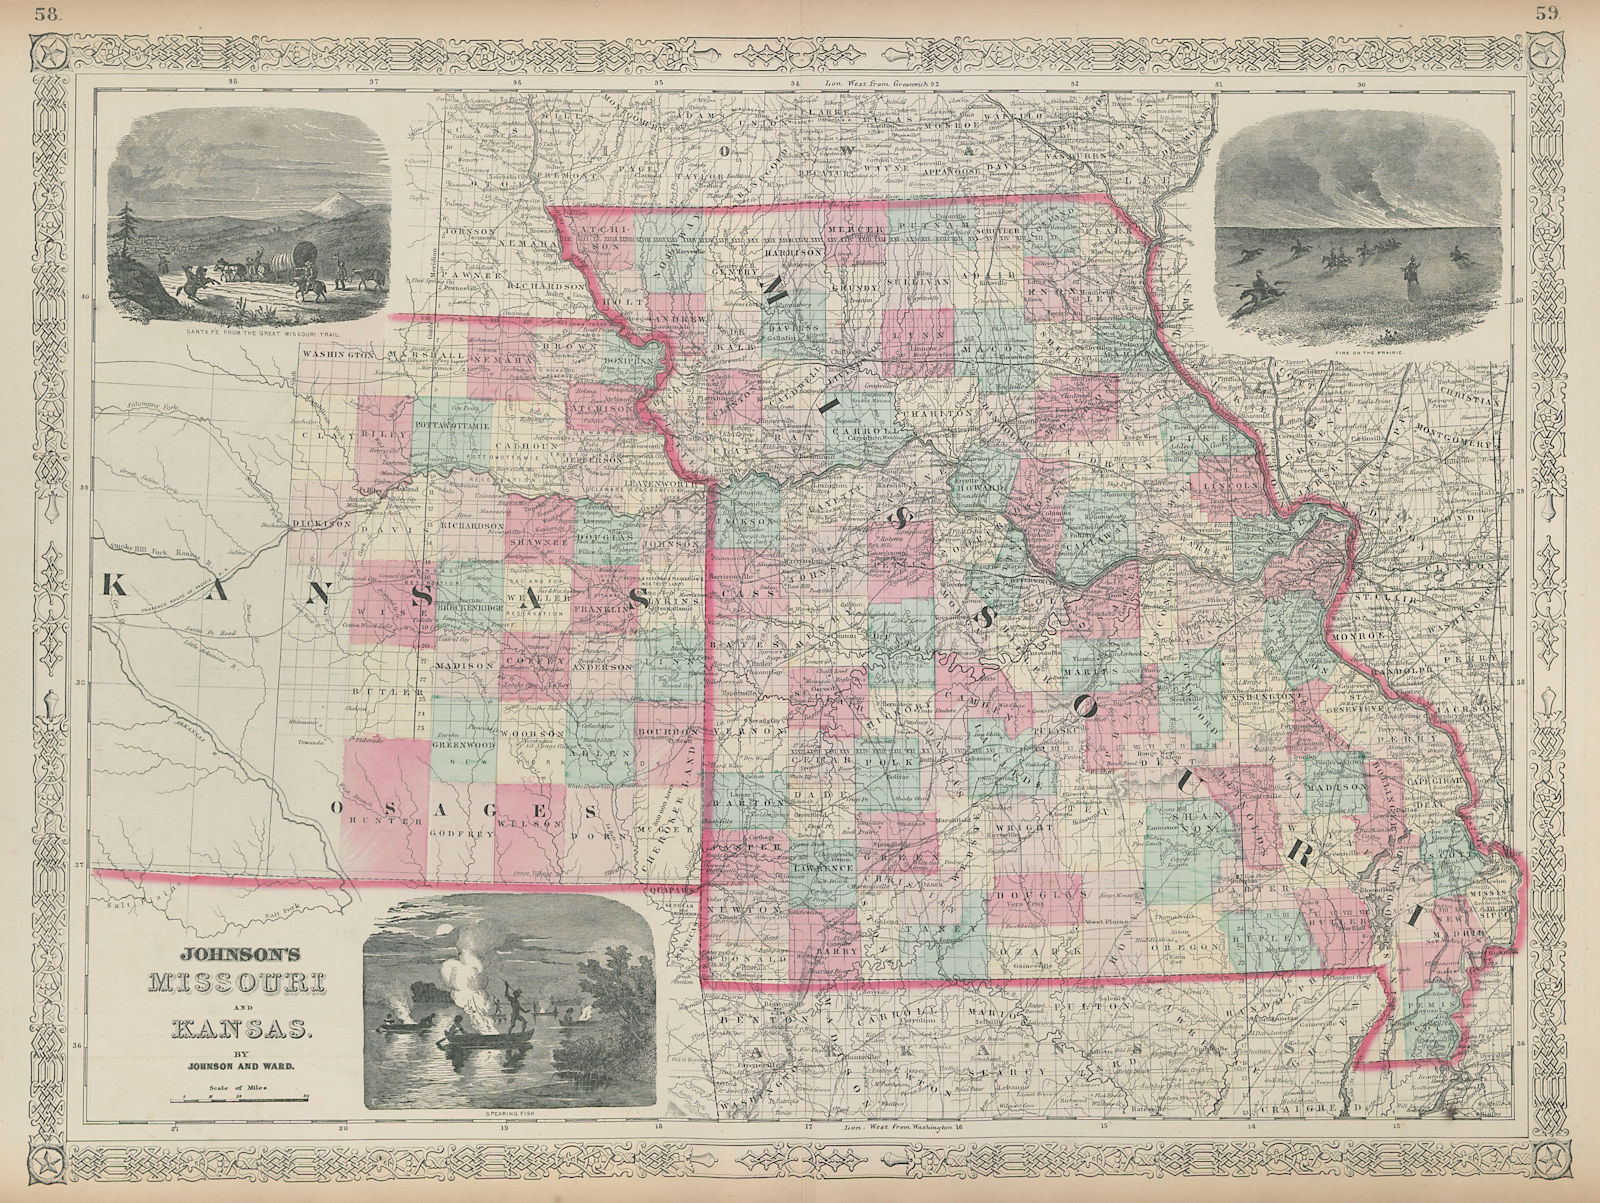 Johnson's Missouri & Kansas. US state map showing counties 1865 old